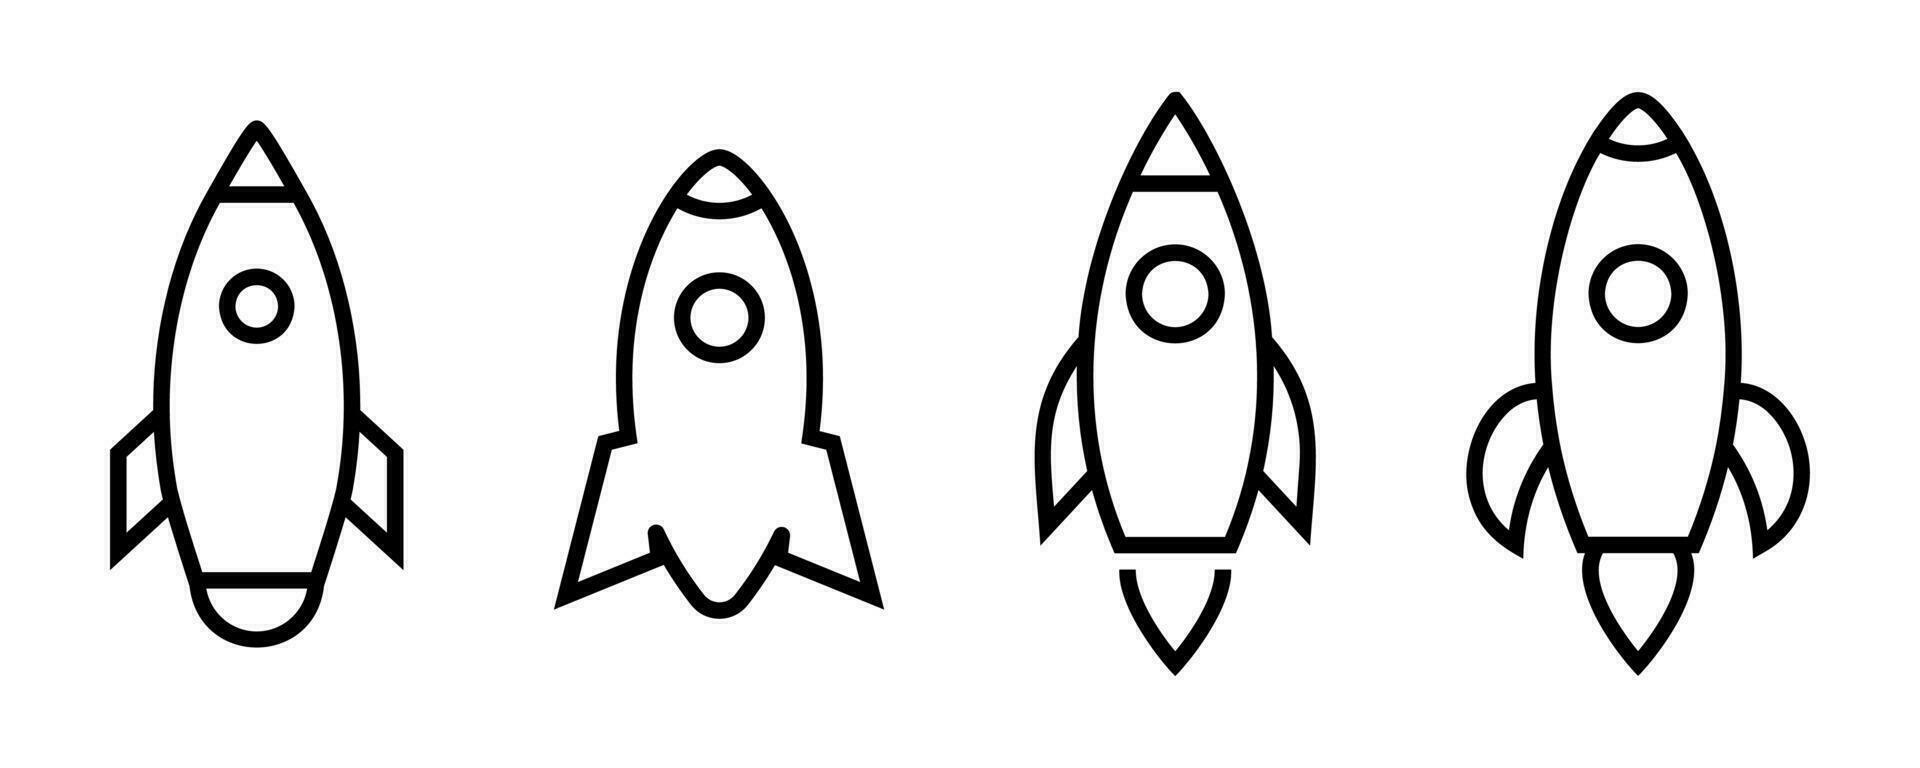 schets raket pictogrammen set. lineair ruimteschip symbool. schets zwart raket icoon. opstarten symbool. transparant ruimtevaartuig teken. ruimteschip silhouet. opstarten illustratie. lineair shuttle icoon in zwart. vector